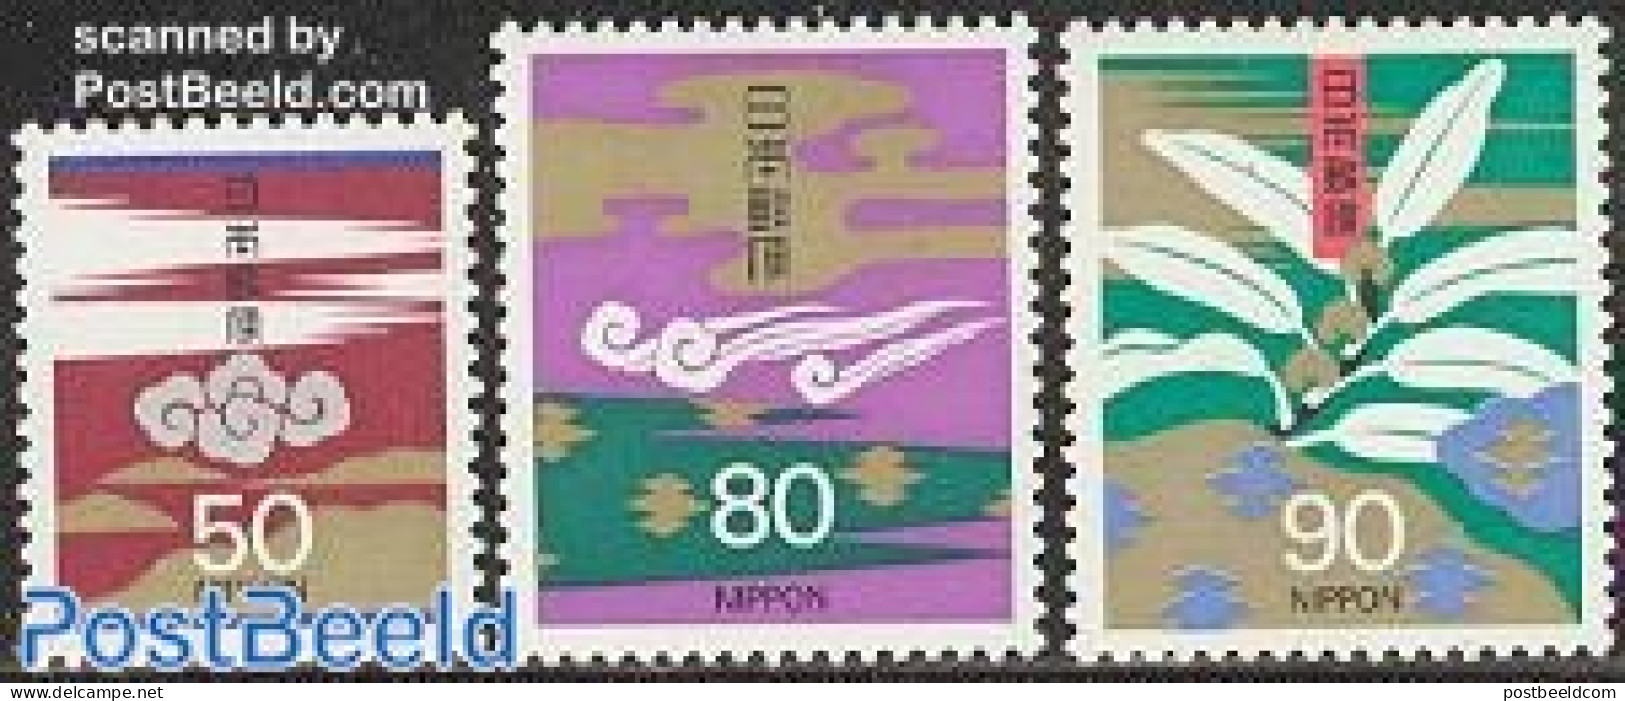 Japan 1995 Greeting Stamps 3v, Mint NH - Ungebraucht